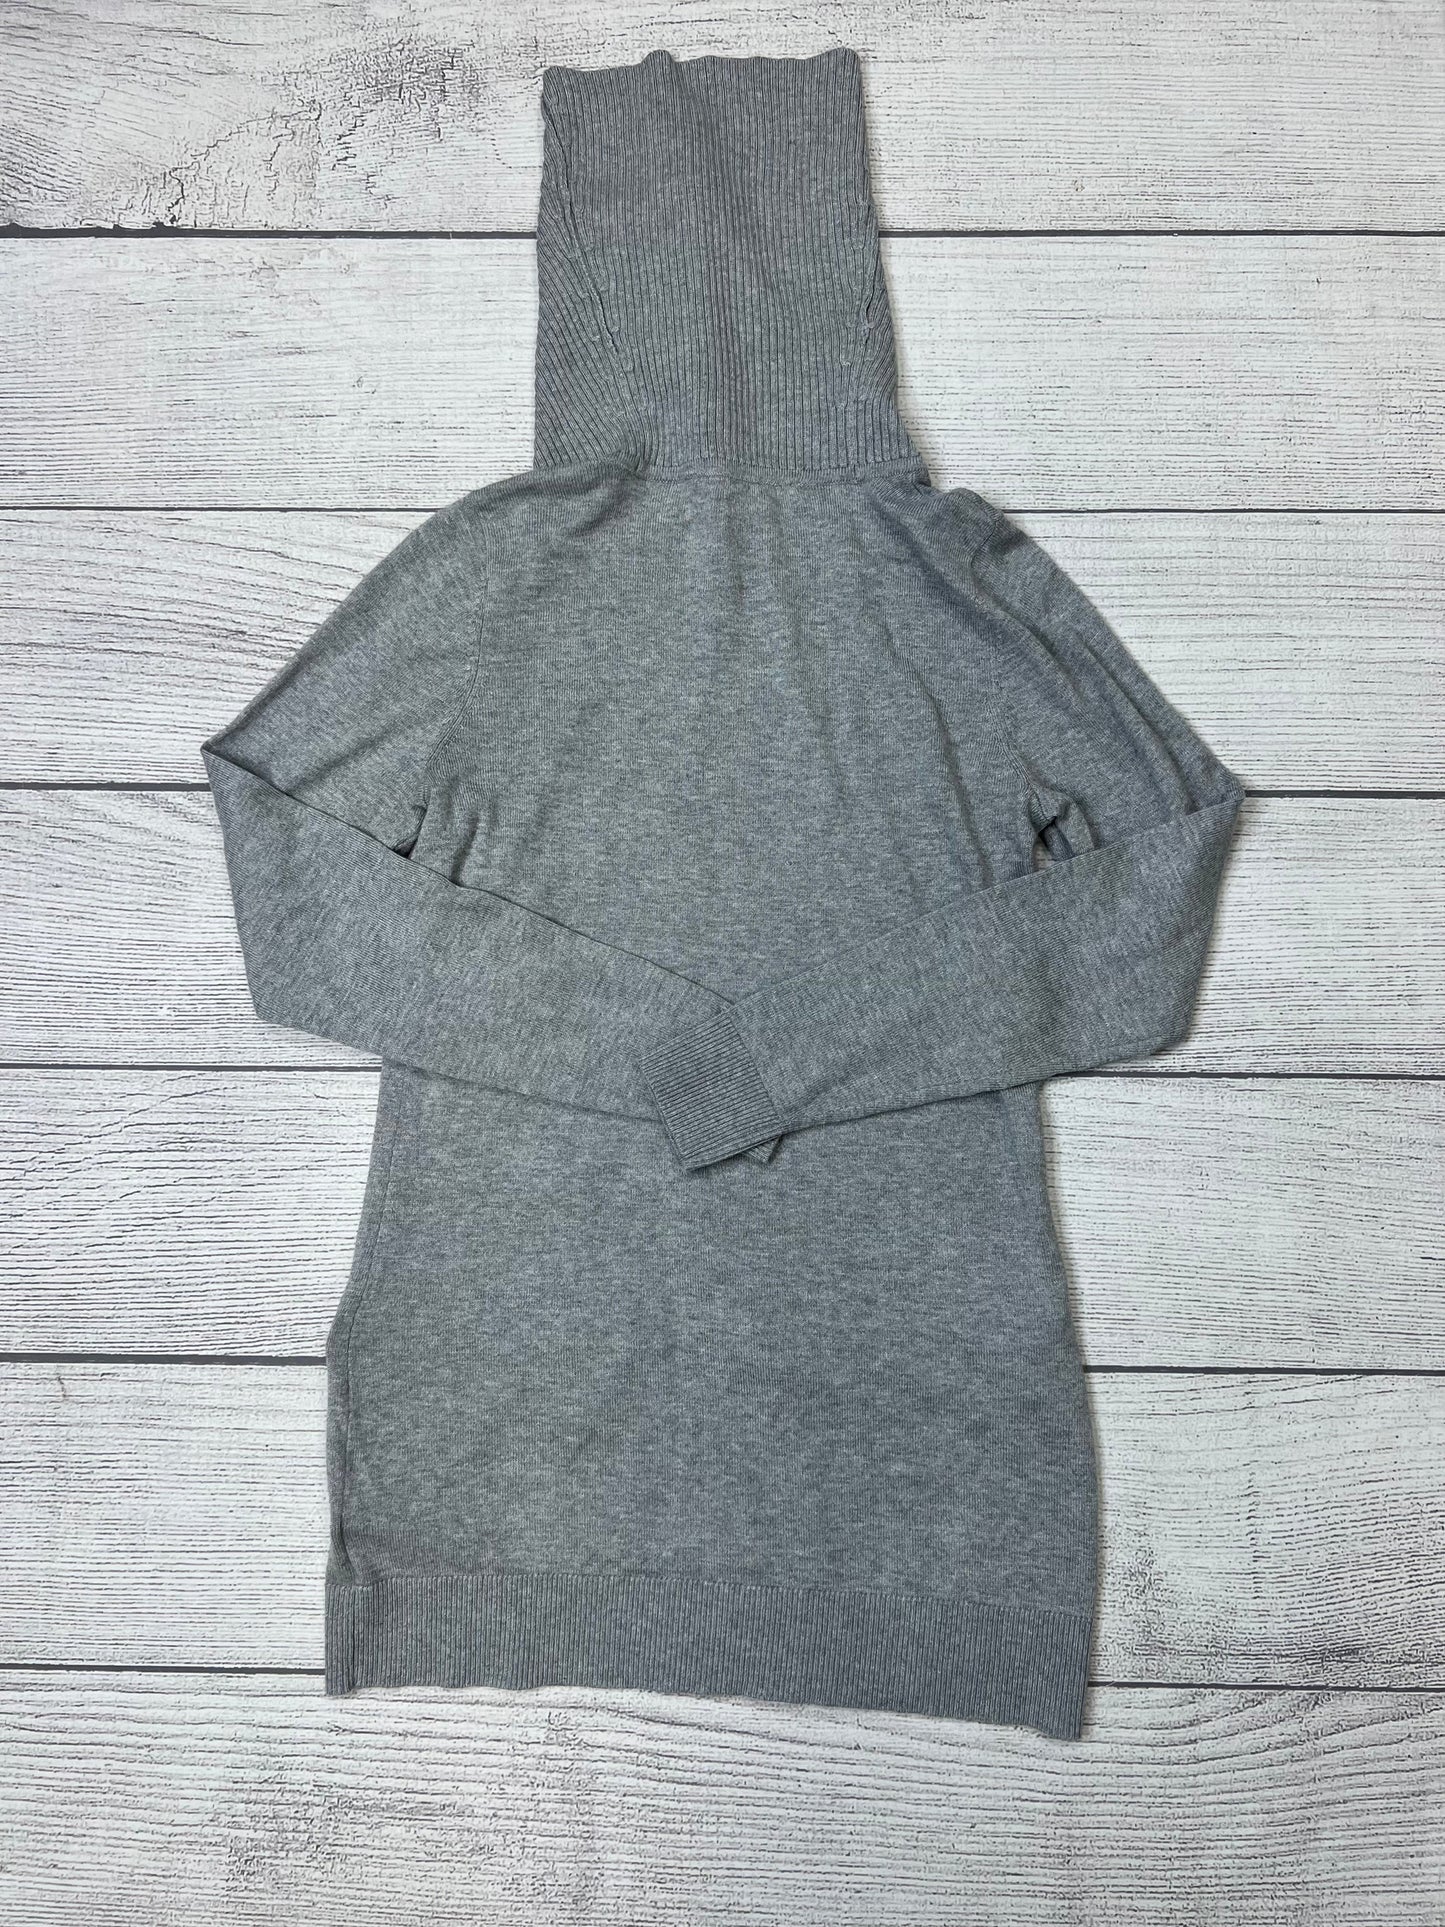 Sweater Designer By Michael Kors  Size: Xs